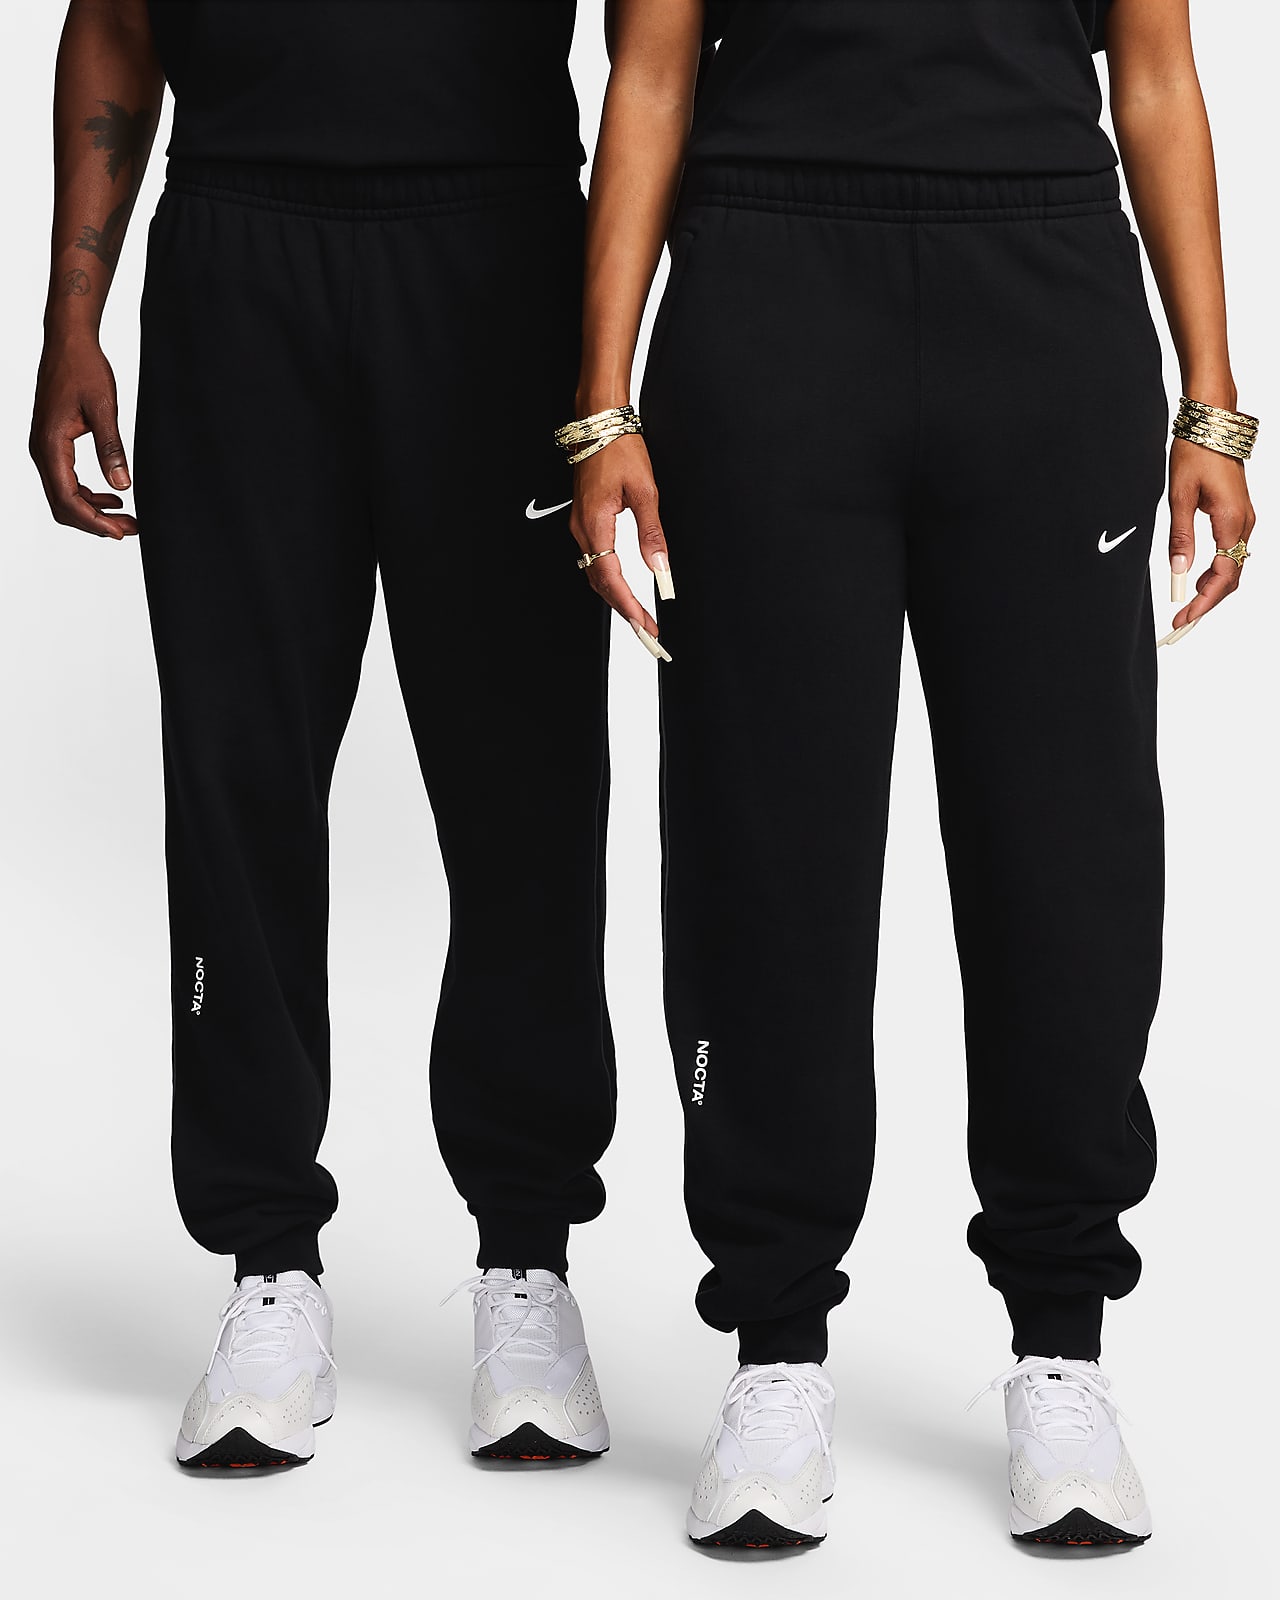 Nike x Drake NOCTA NRG Men's Fleece Pants Gray FN7661-063